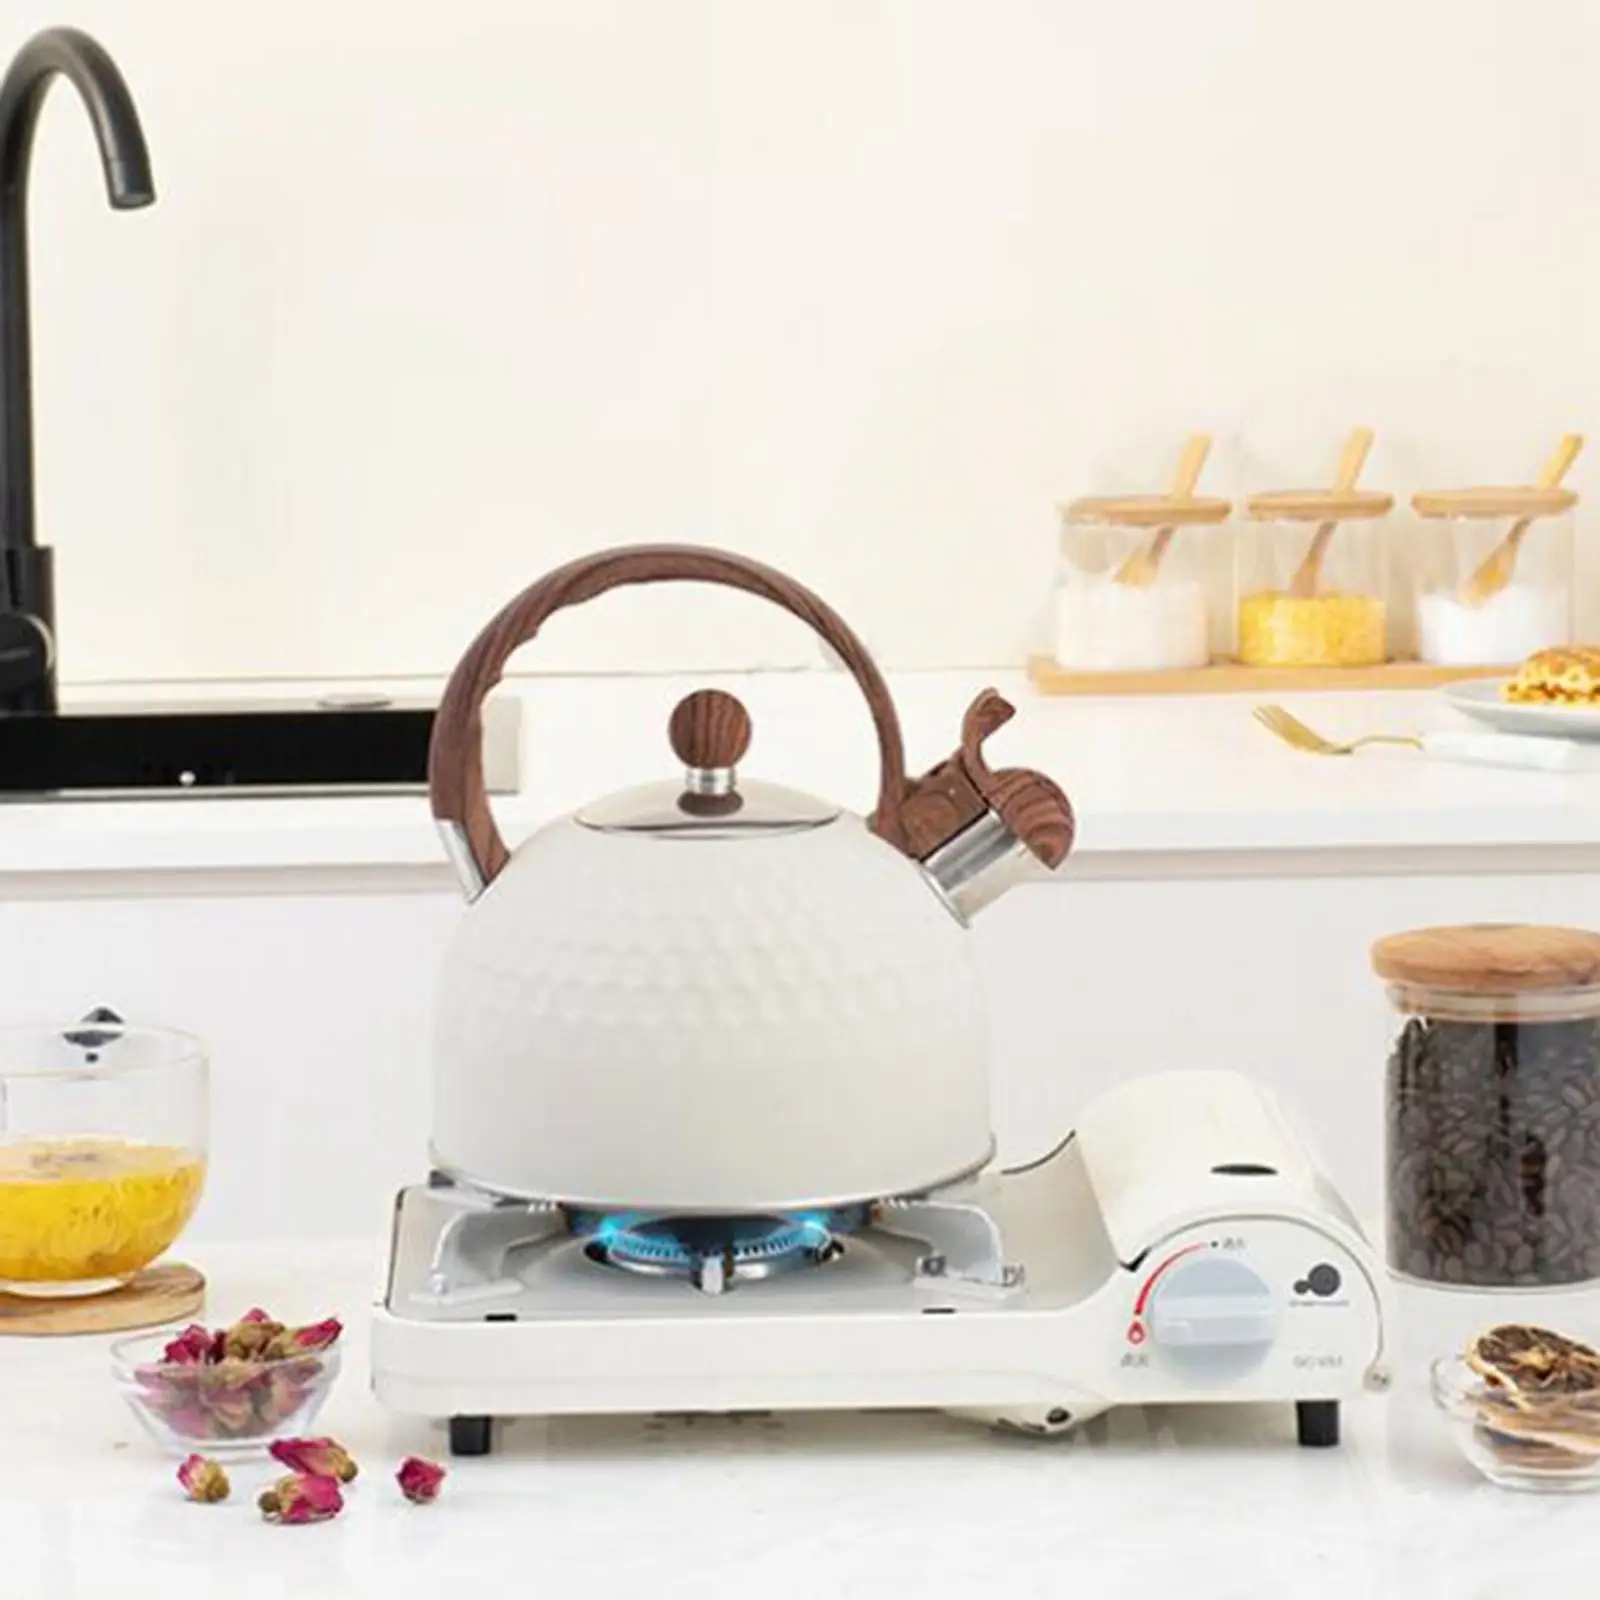 Portable Whistling Tea Kettle, Stainless Steel Loud Whistle Heat-Proof 2.5 Qt Enamel Teapot for Drinking Stovetops Family Cook